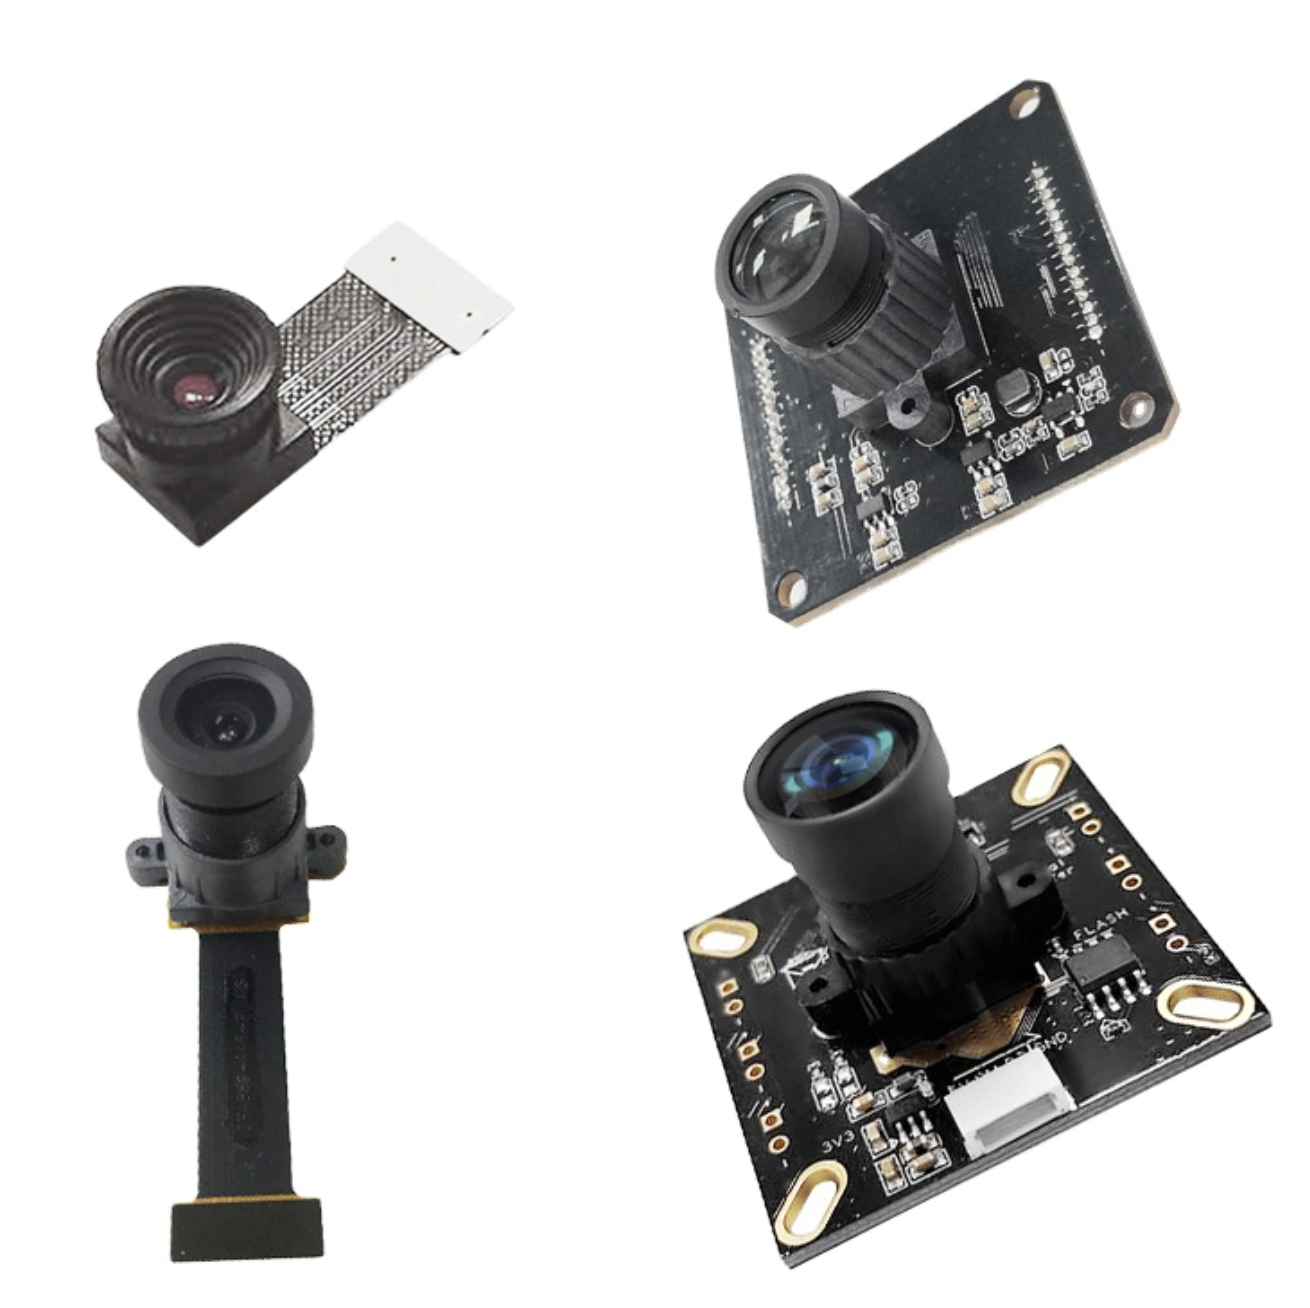 Hot Sale for Ov5640 - Support customization AR0144 1MP 720P AR VR Color Global shutter 60fps DVP MIPI USB Camera Module – Ronghua